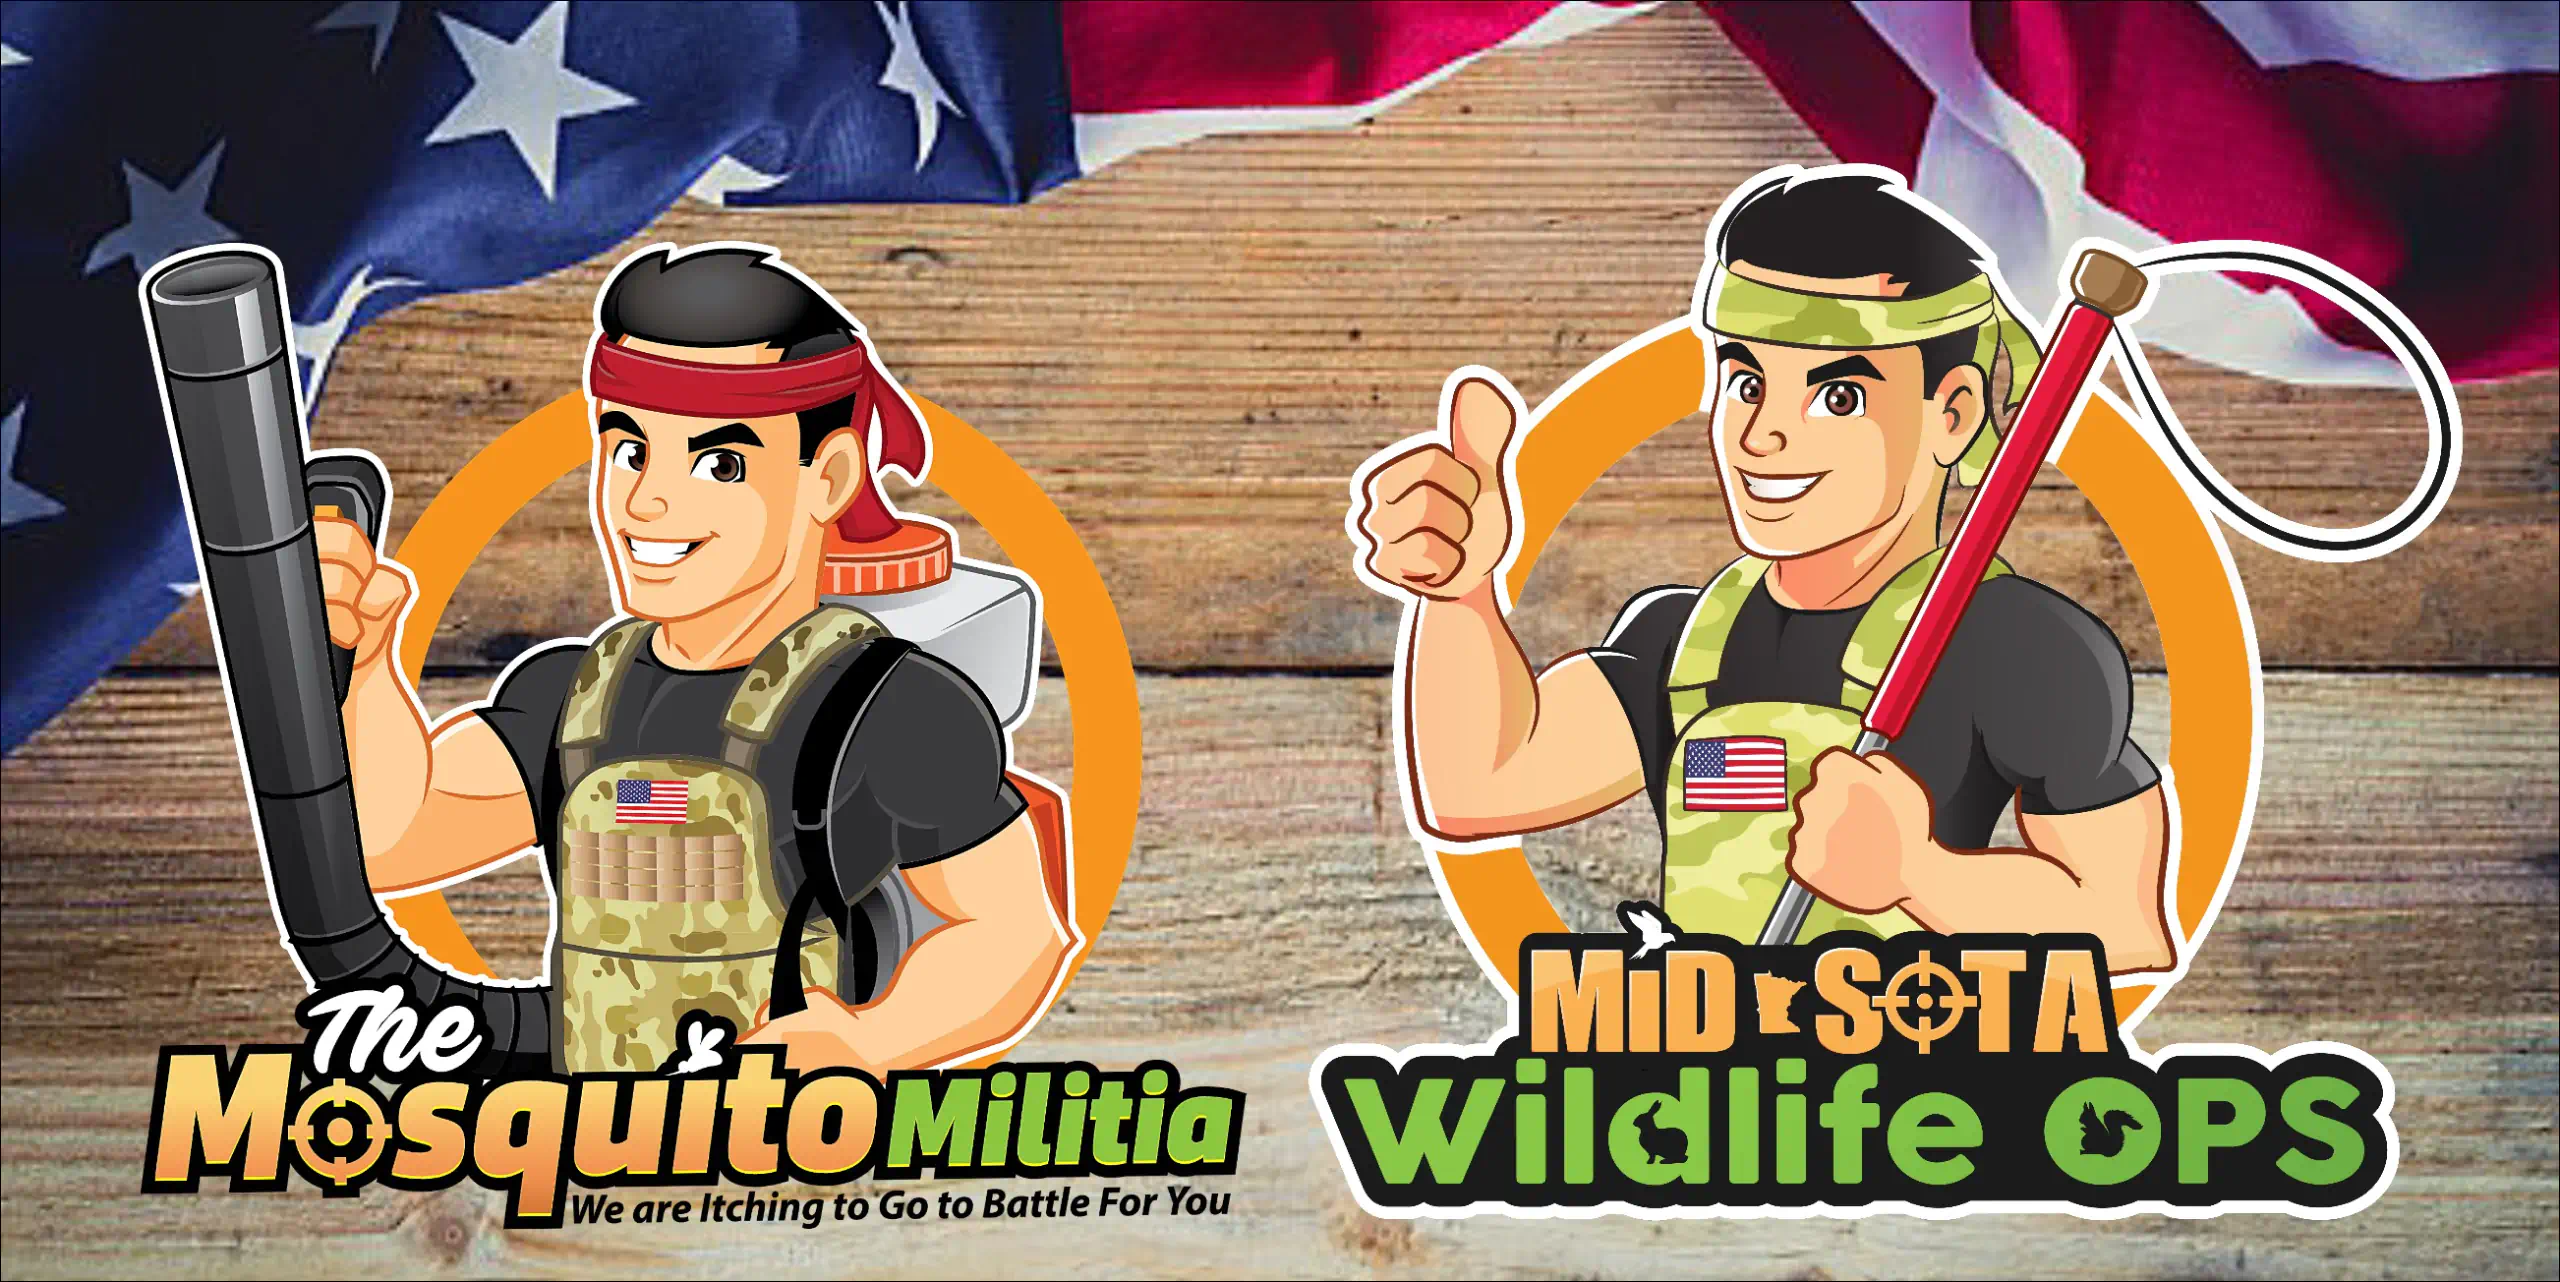 The Mosquito Militia & Mid Sota Wildlife Ops logos